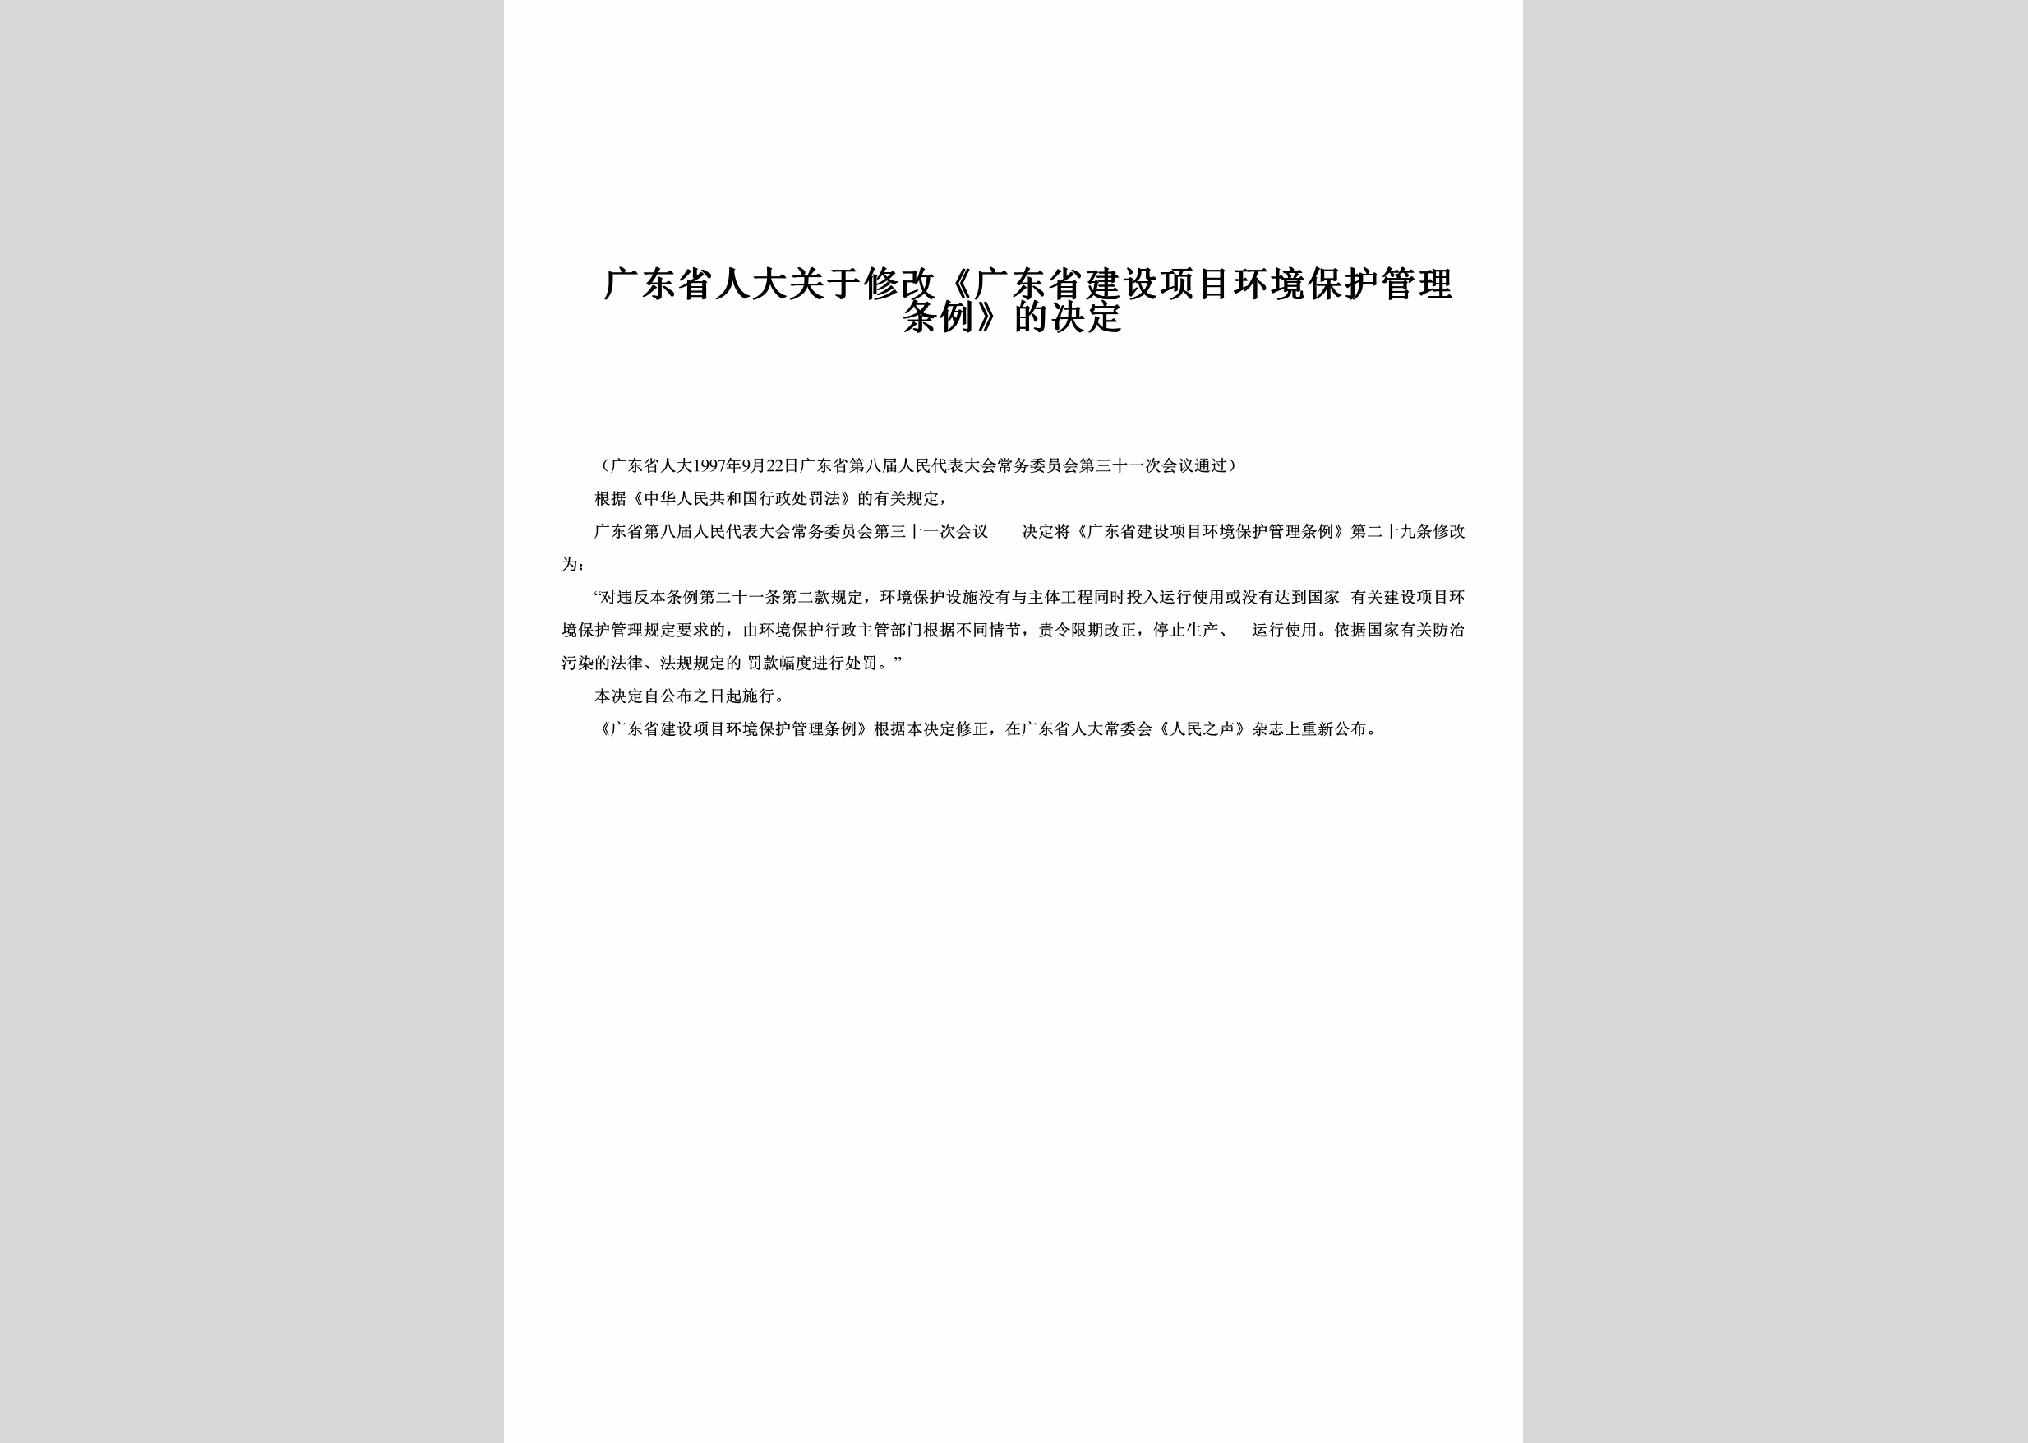 GD-GYXGGDS-1997：关于修改《广东省建设项目环境保护管理条例》的决定